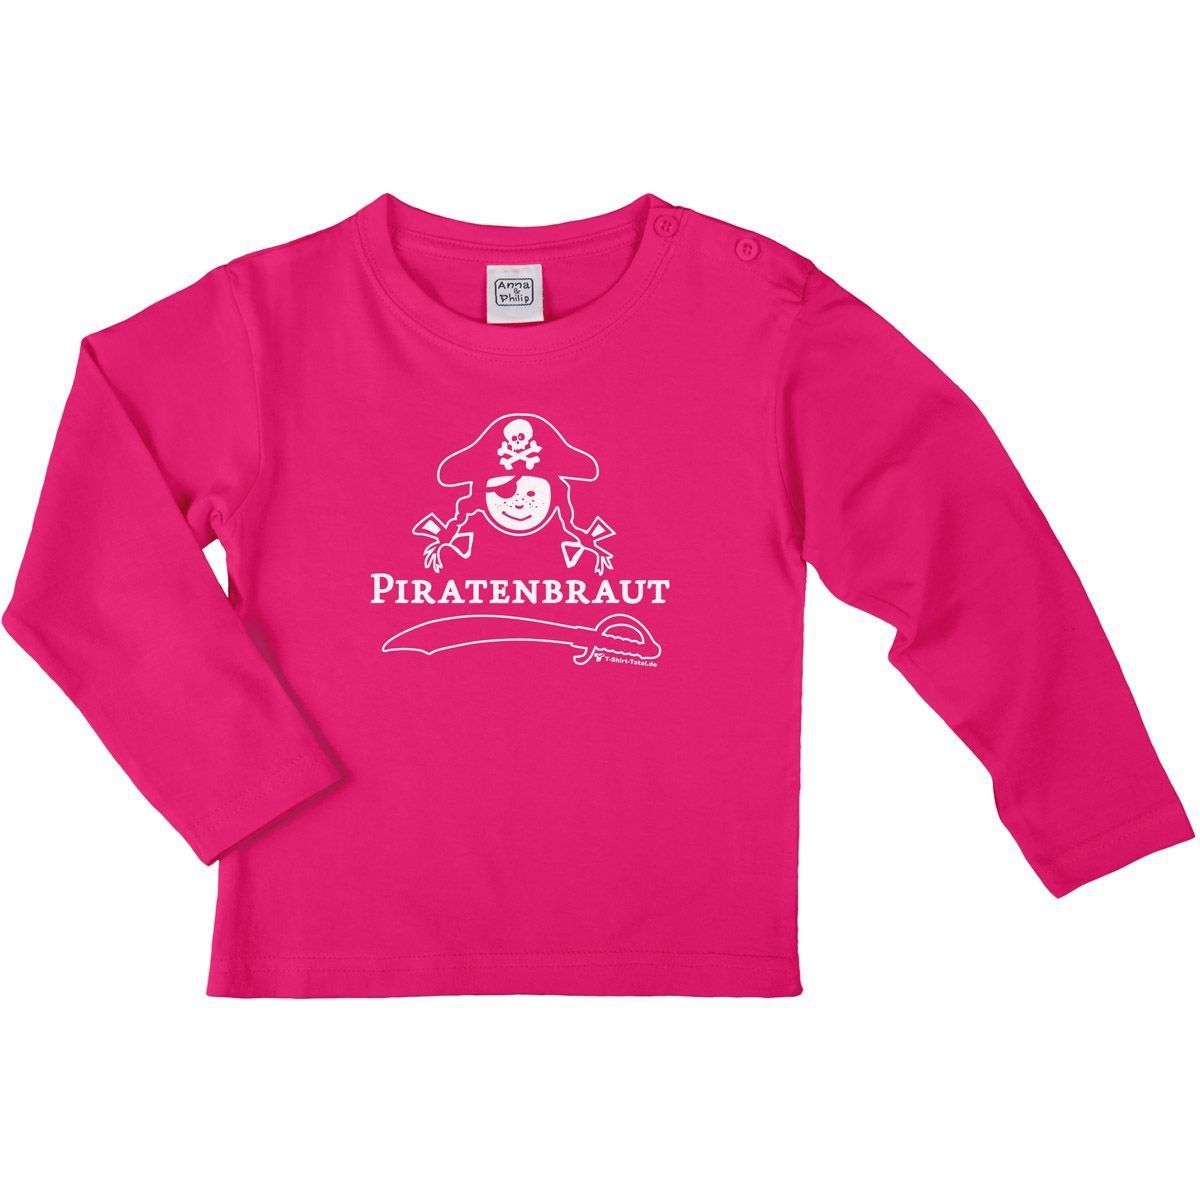 Piratenbraut Kinder Langarm Shirt pink 110 / 116